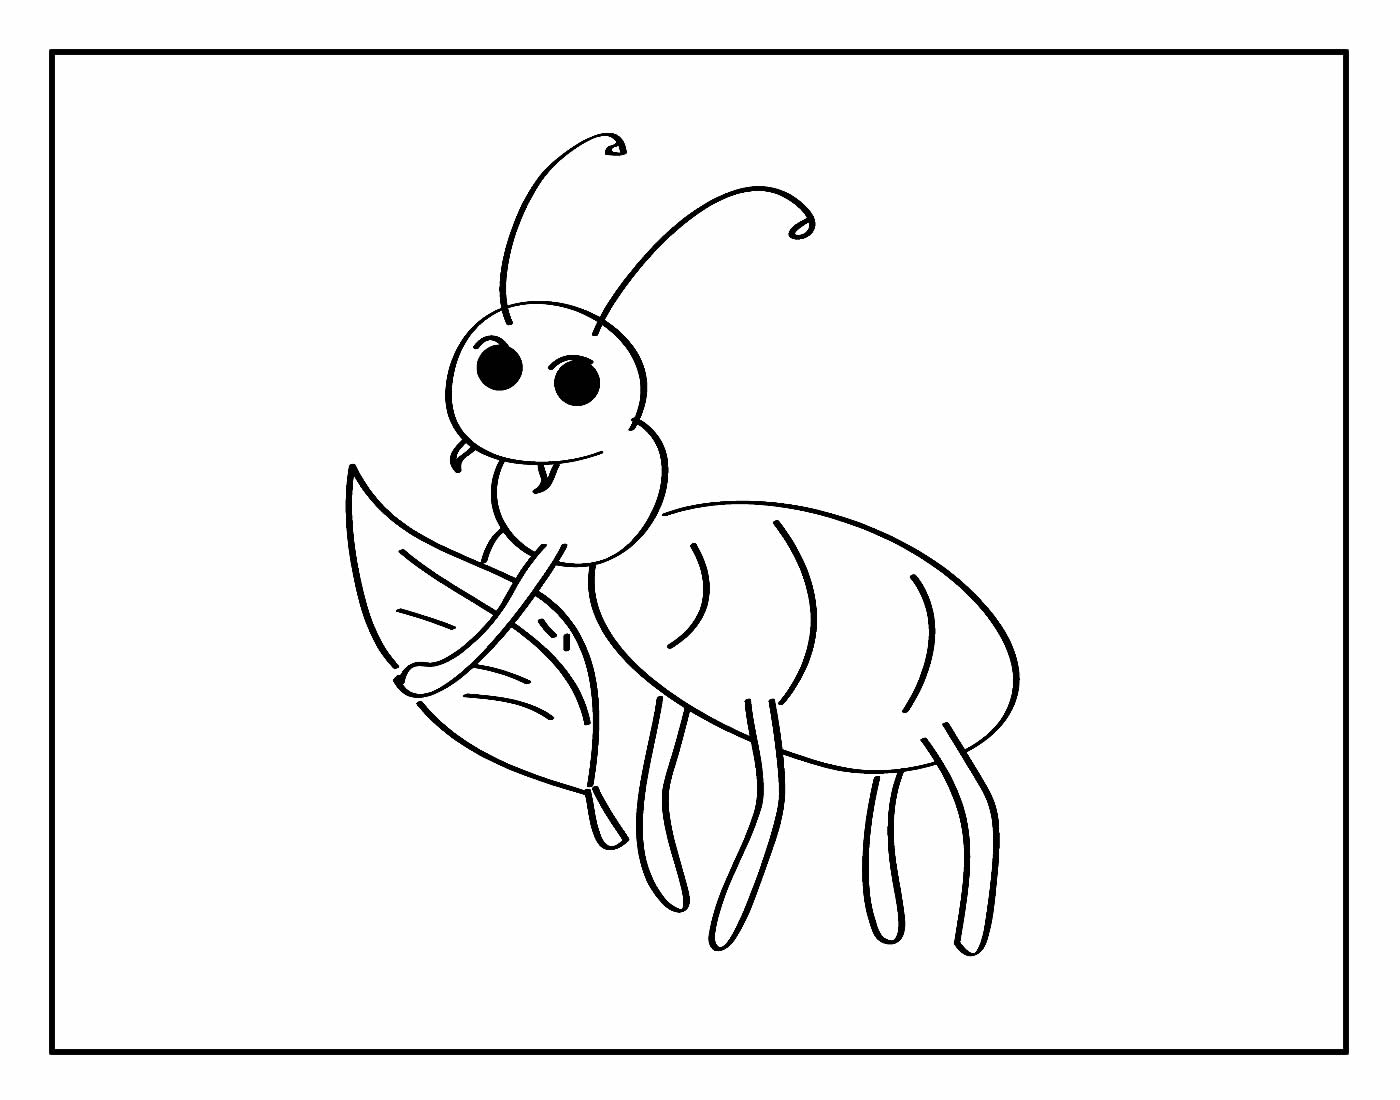 Desenho para colorir de Formiga